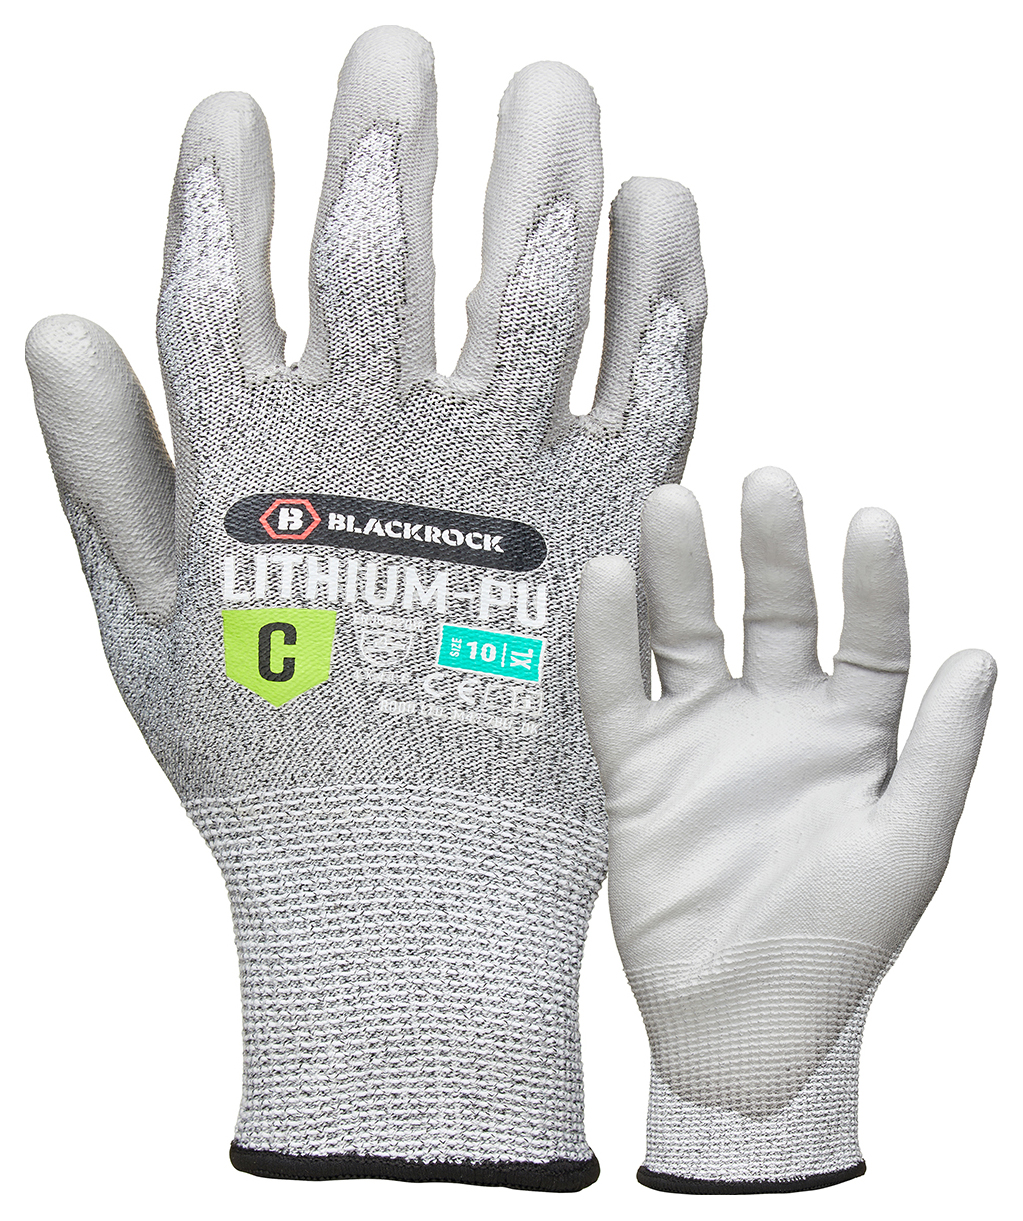 Image of Blackrock PU Coated Cut Resistant Grey Gloves - Size XL/10